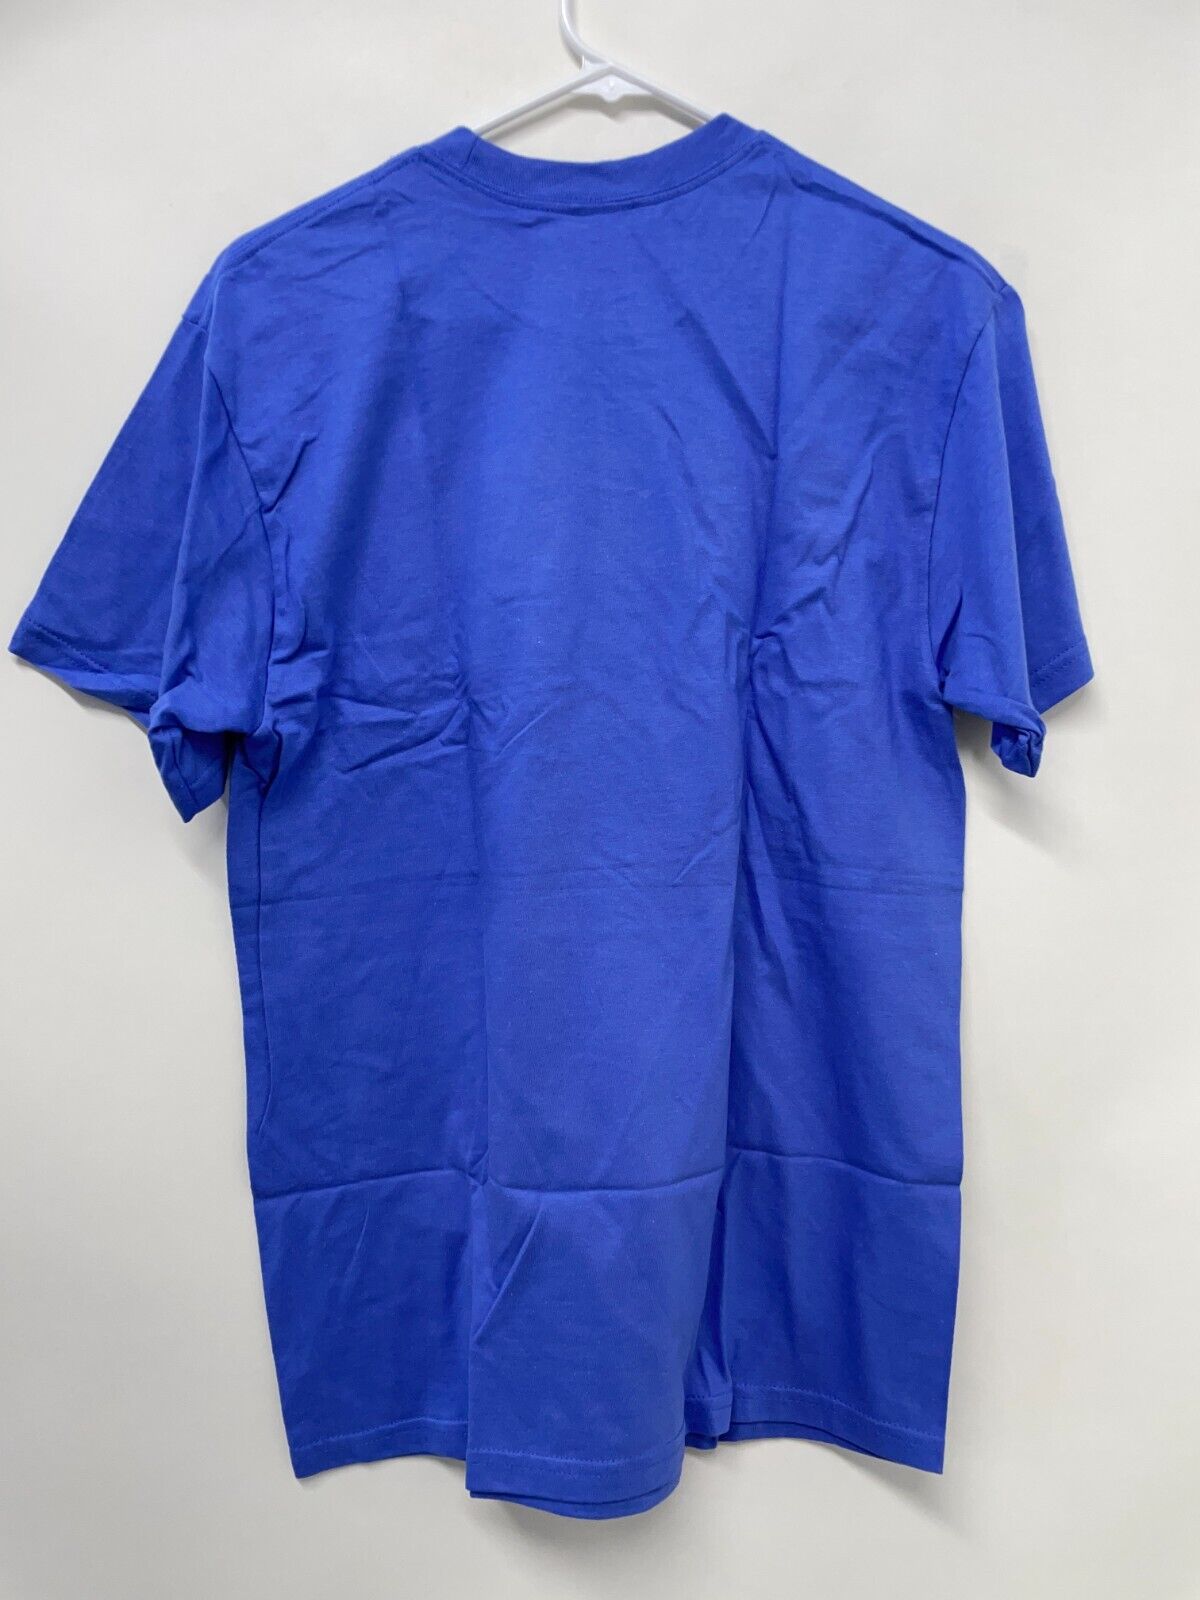 Marina Unisex M Mans World T-Shirt Blue Graphic Tee Short Sleeve Crewneck Pop